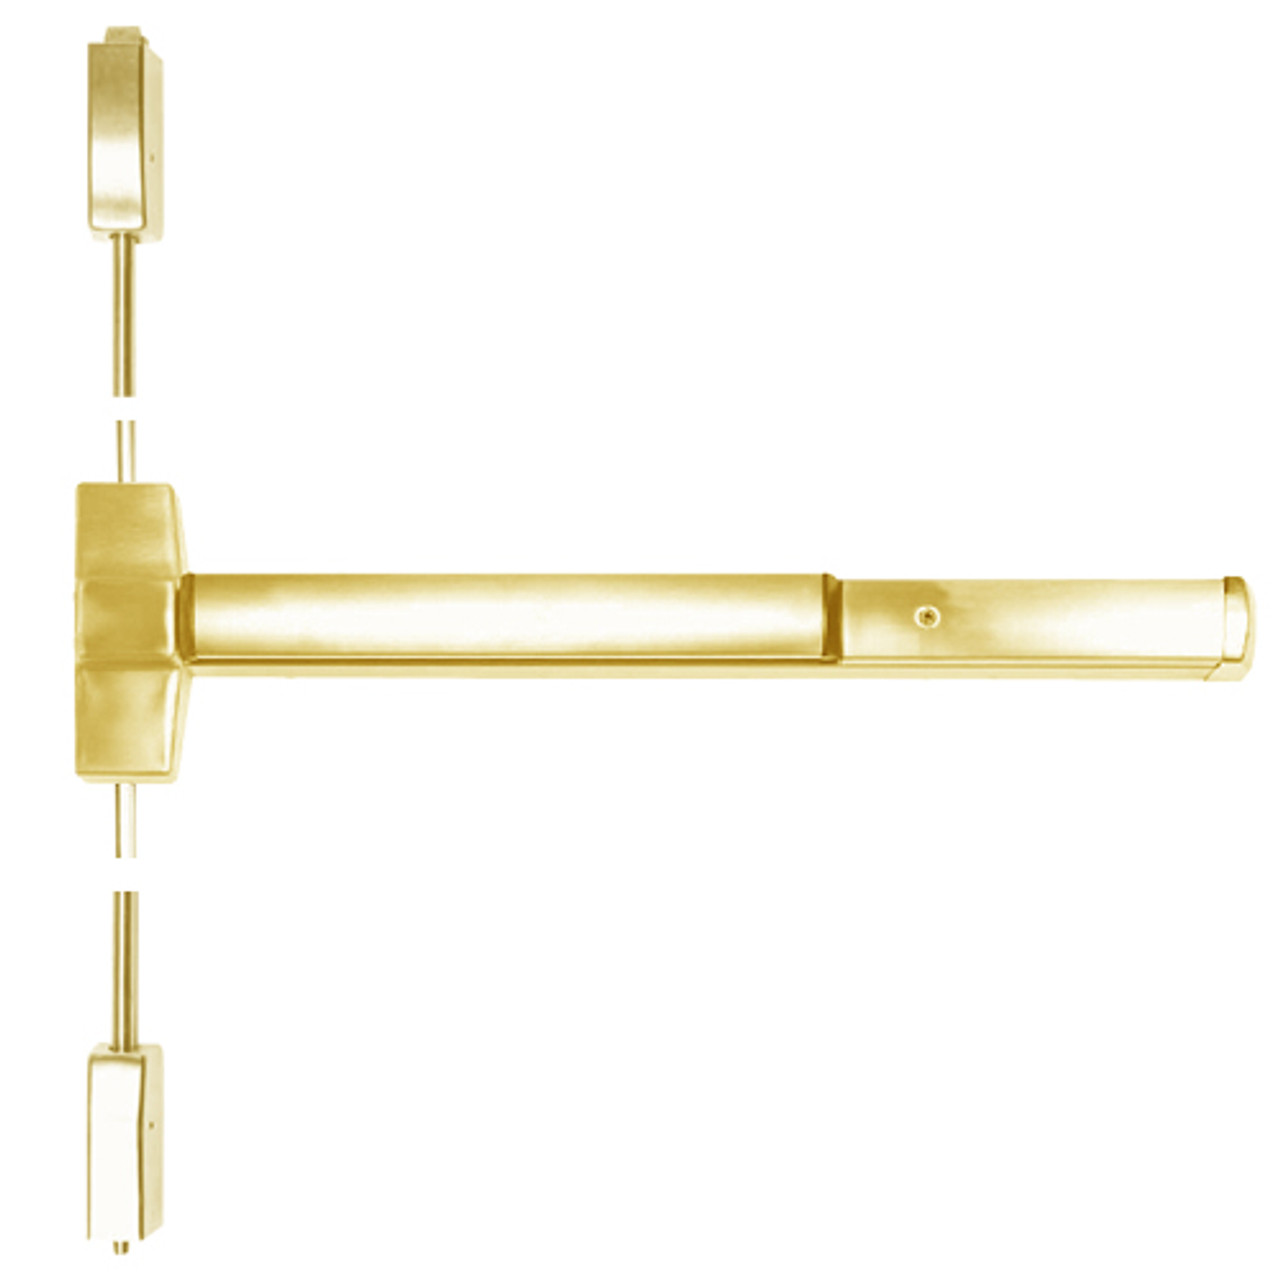 ED5400-605-W048 Corbin ED5400 Series Non Fire Rated Vertical Rod Exit Device in Bright Brass Finish